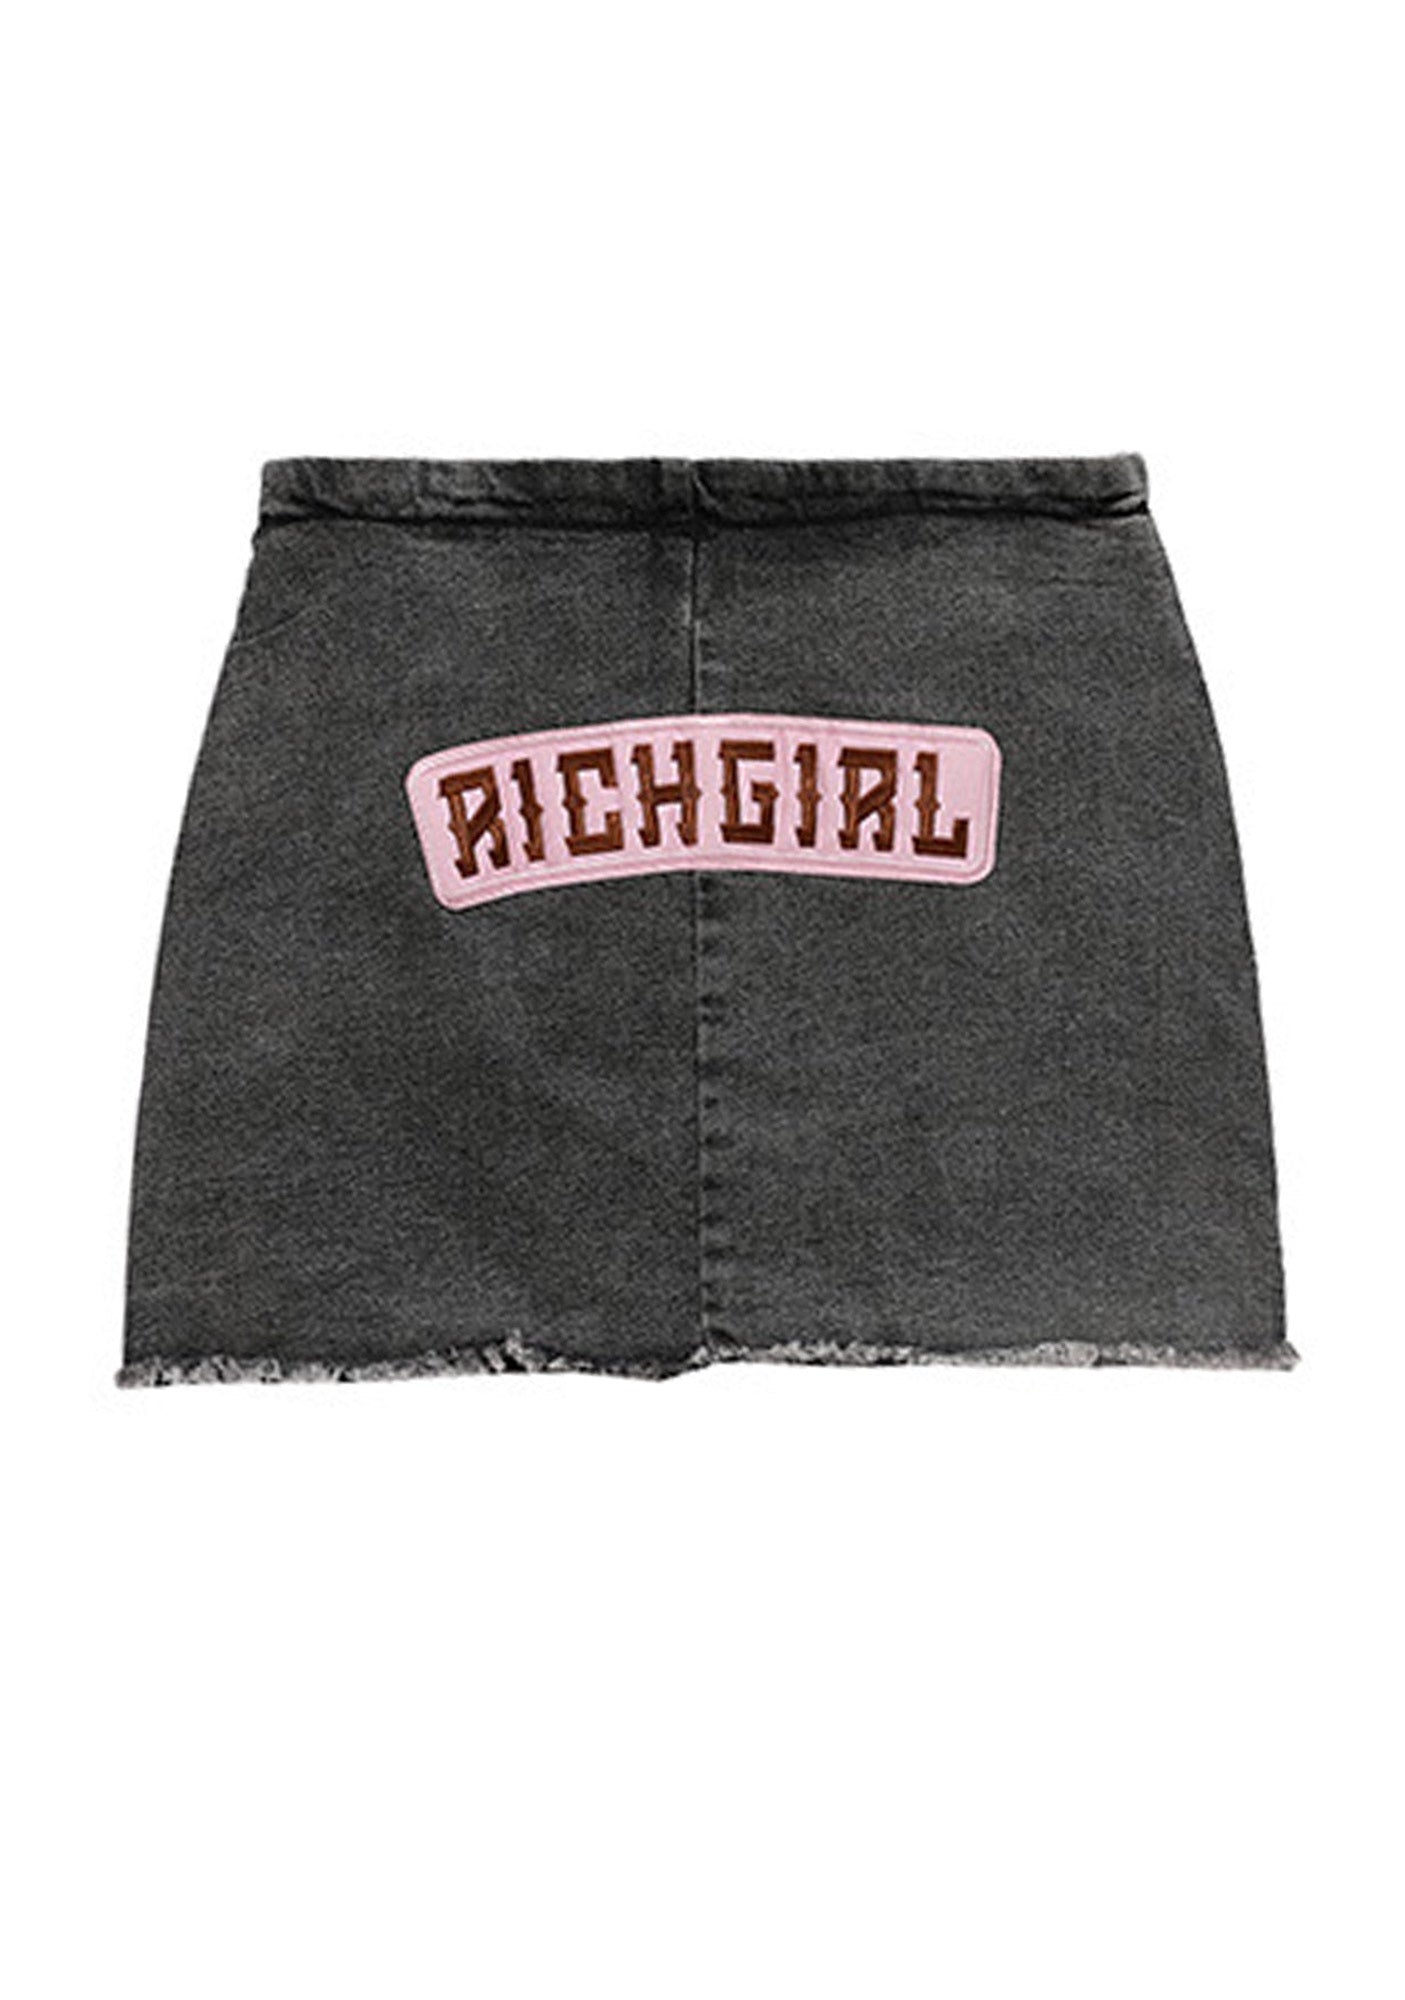 Vintage Black Richgirl Embroidery Skirt